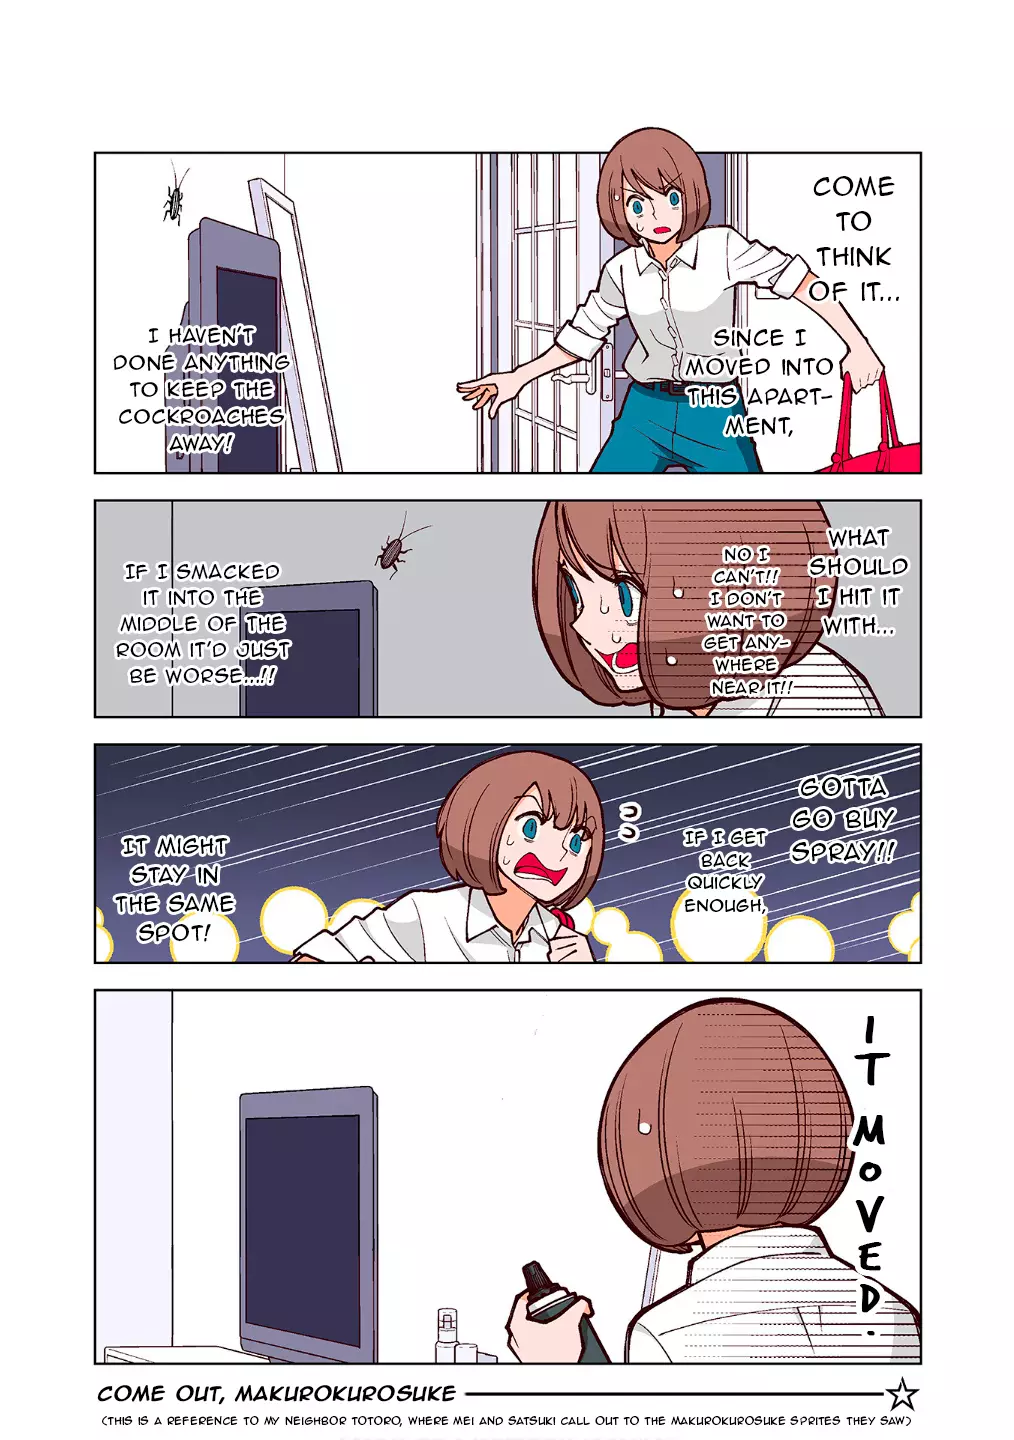 Kanako's Life As An Assassin - 24 page 2